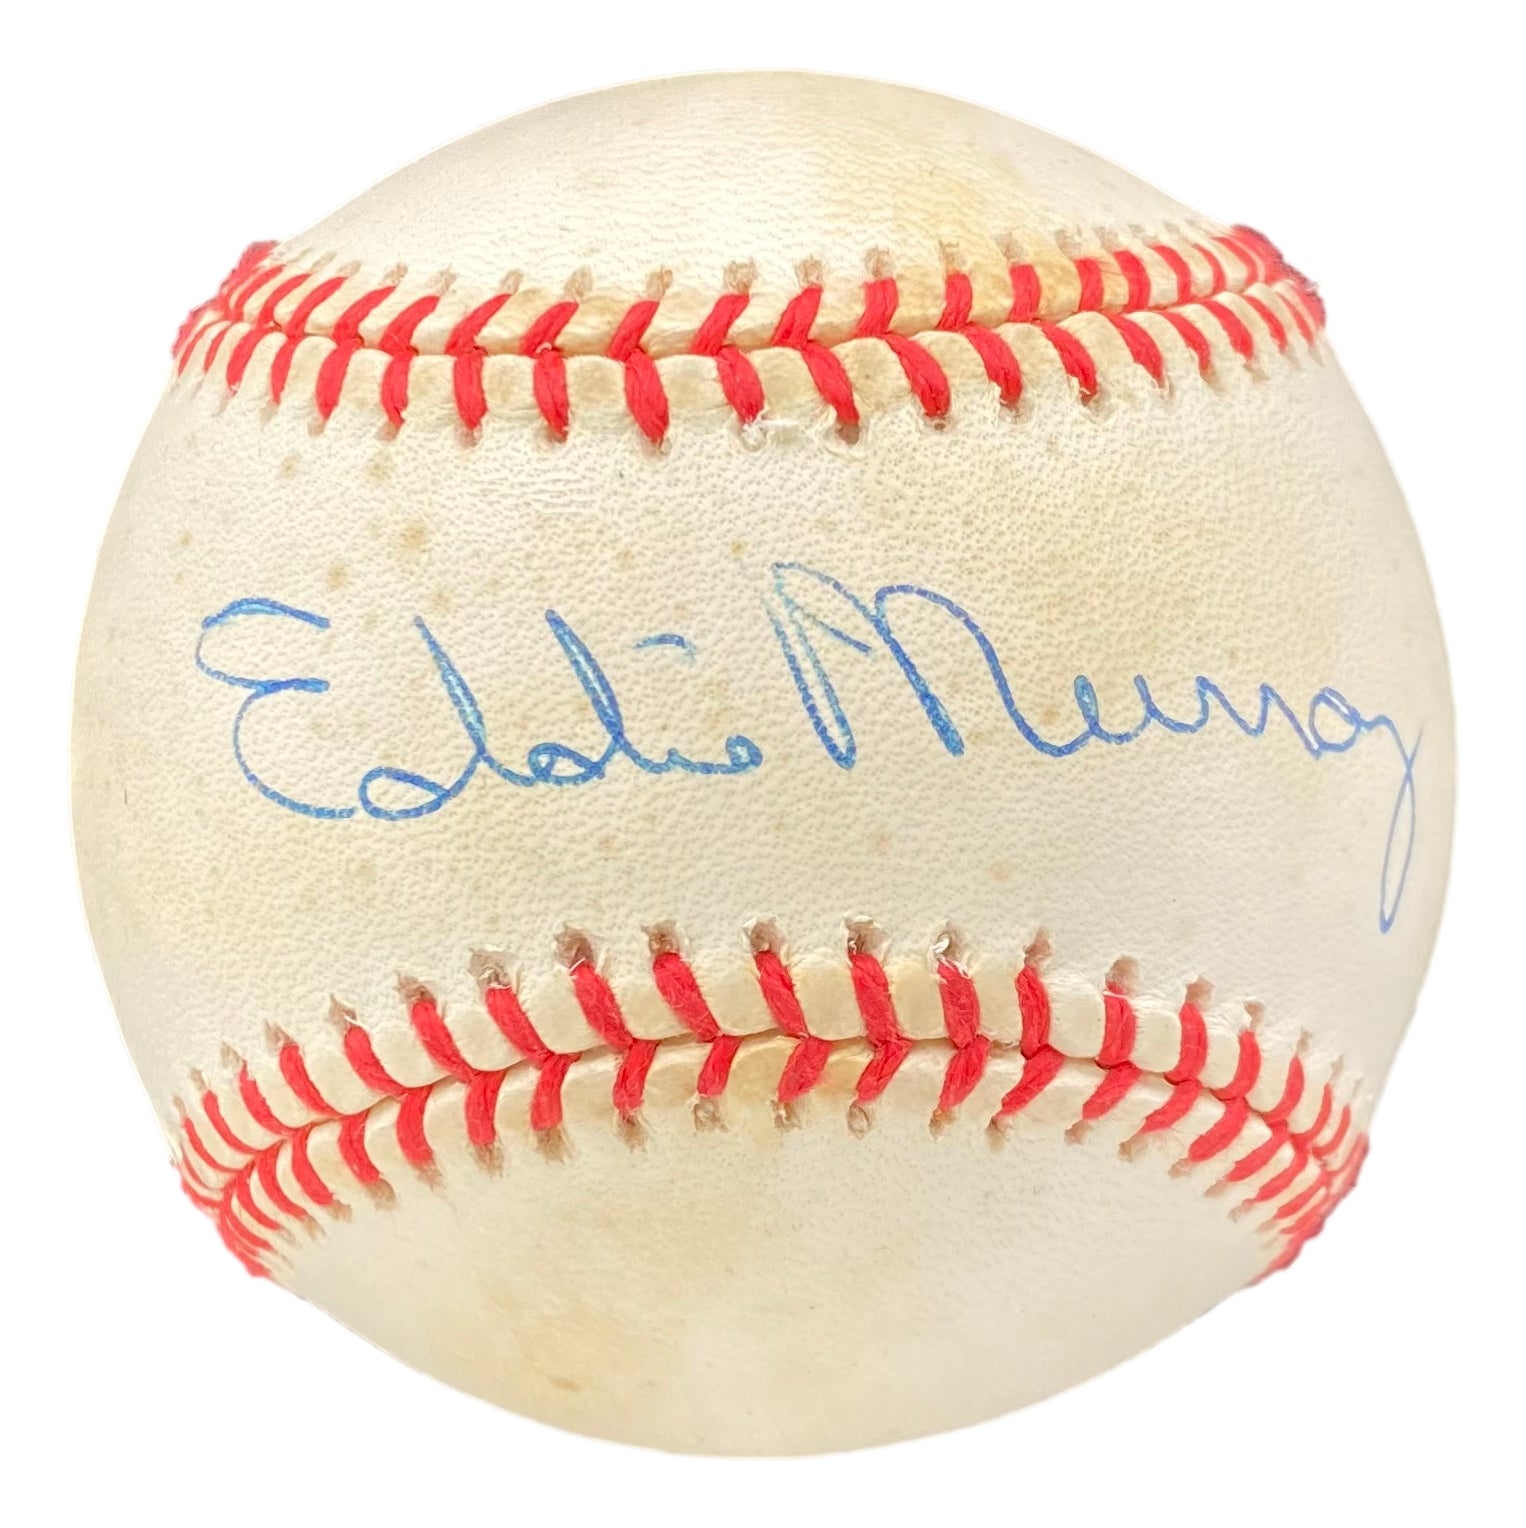 Eddie Murray Autograph Signing